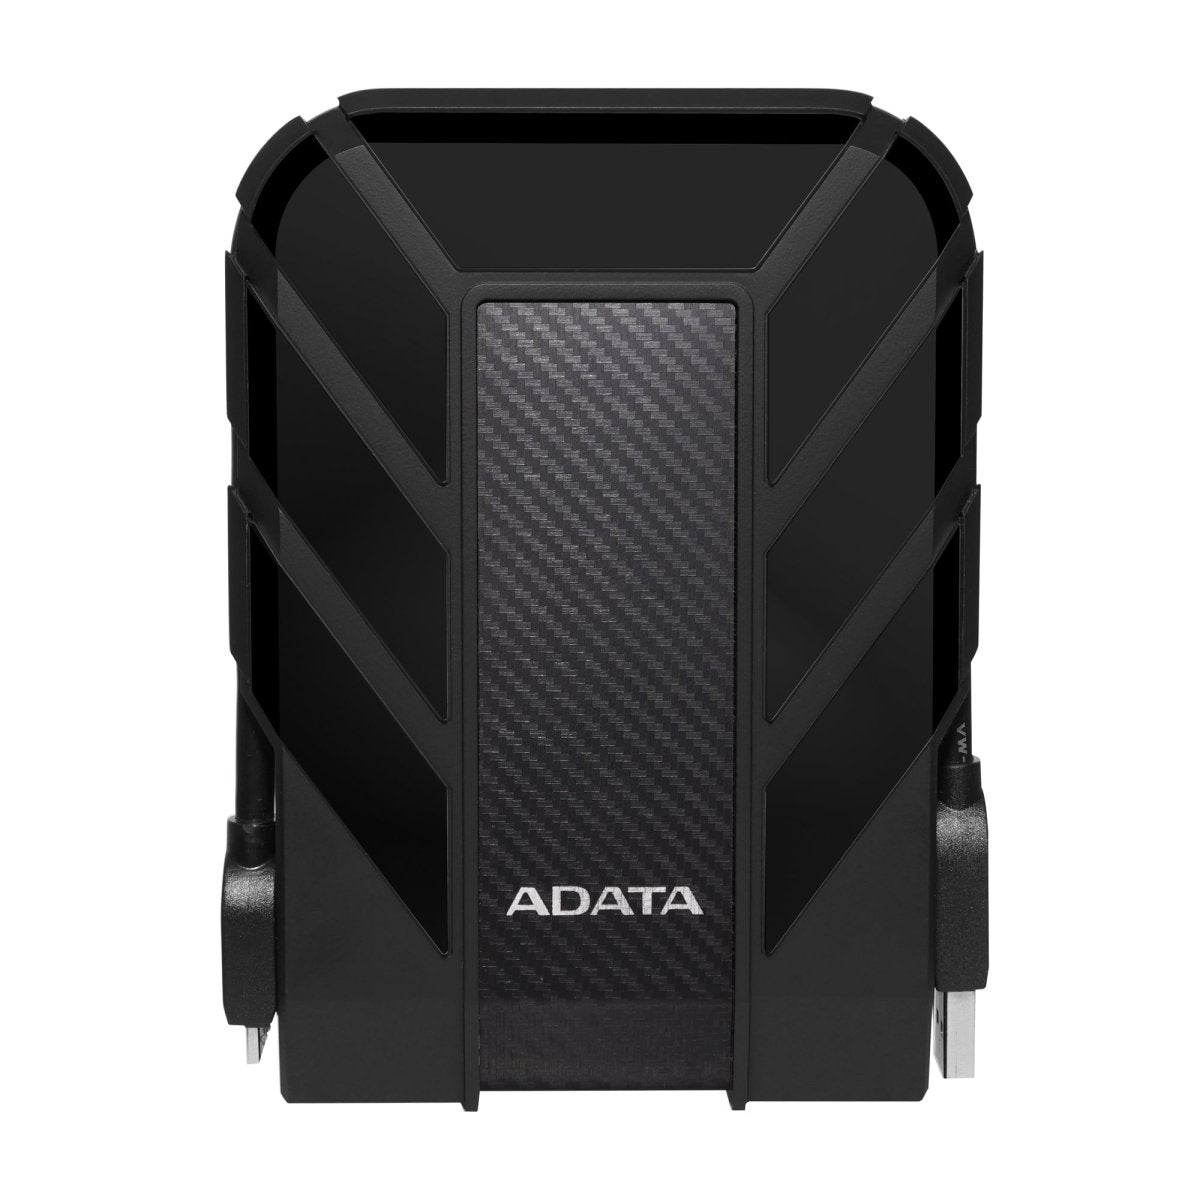 Adata HD710 Pro External Hard Drive | Gigahertz | ADATA